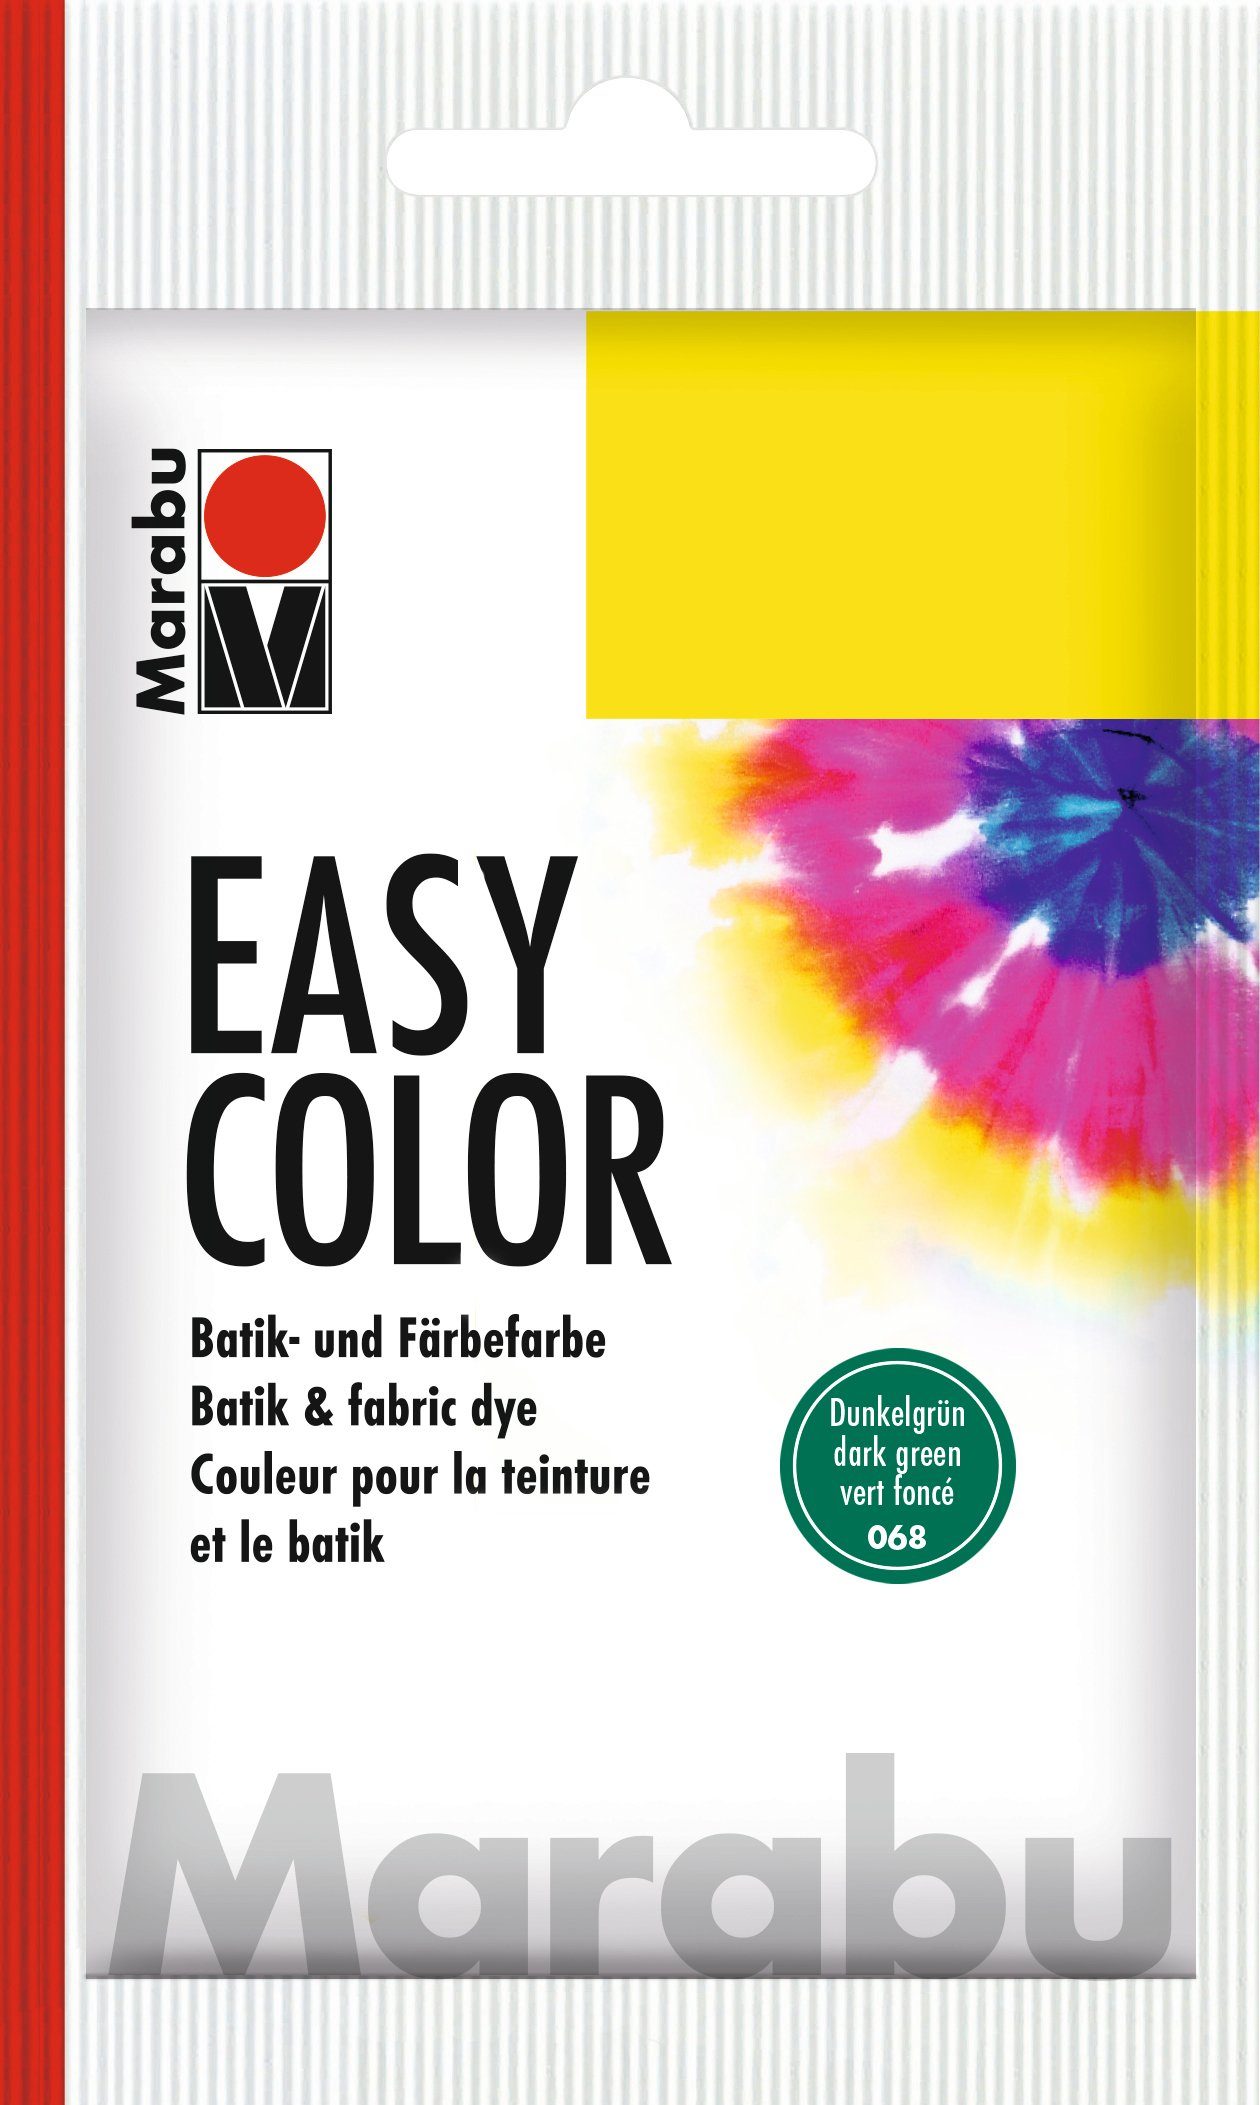 25 Color, Dunkelgrün Easy Bastelfarbe g Marabu